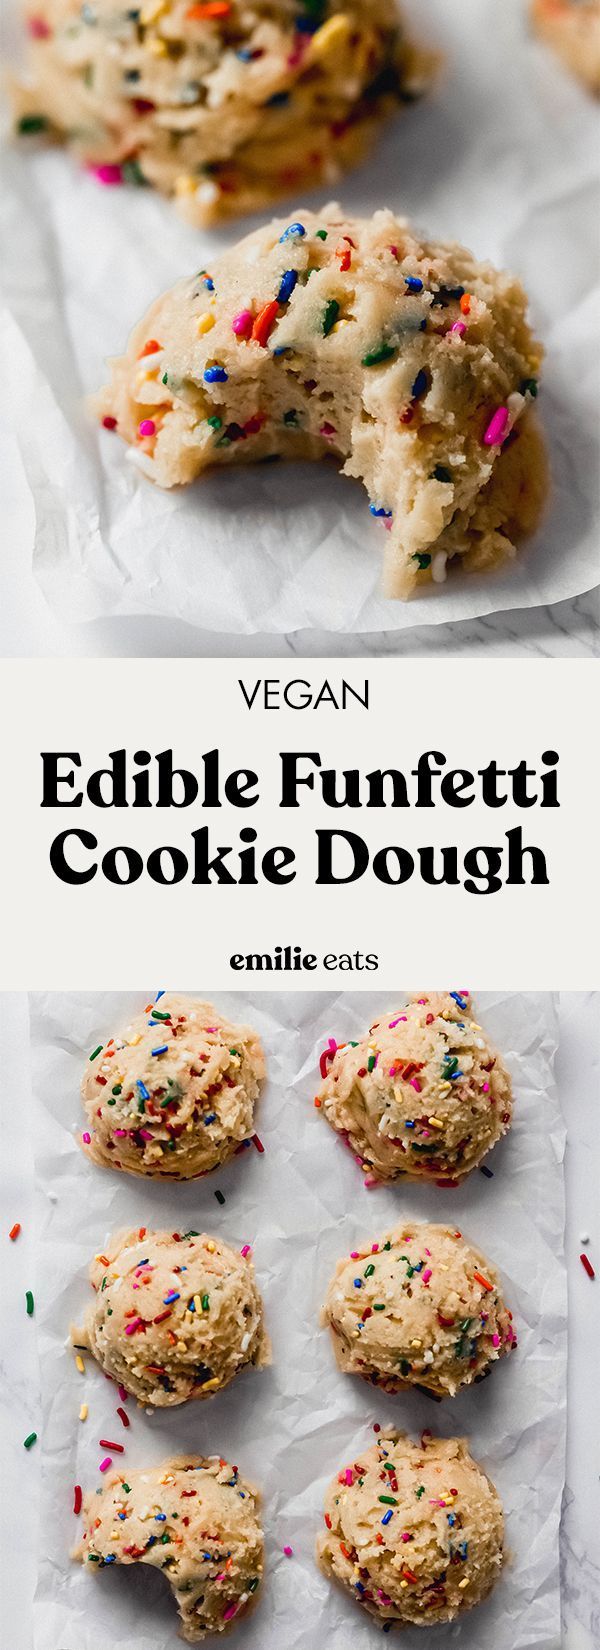 Funfetti Vegan Cookie Dough -   10 vegan desserts For Parties ideas